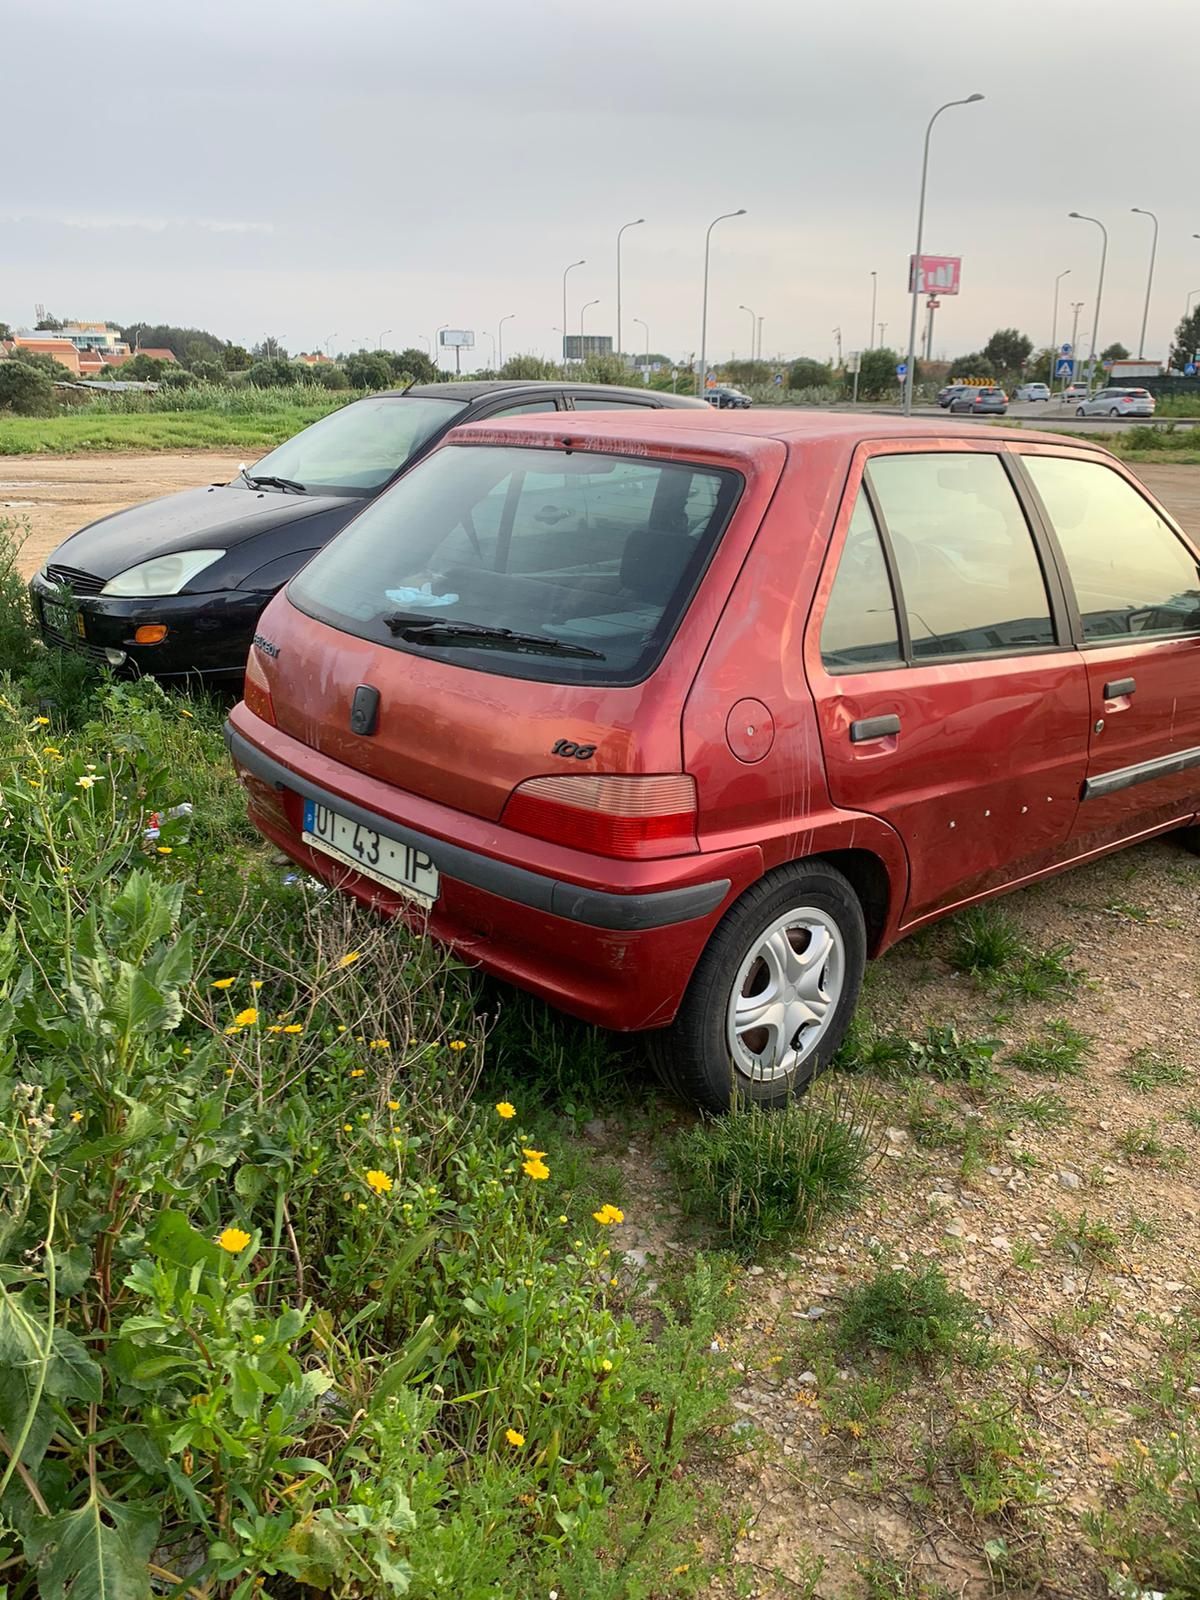 Peugeot 106 acidentado